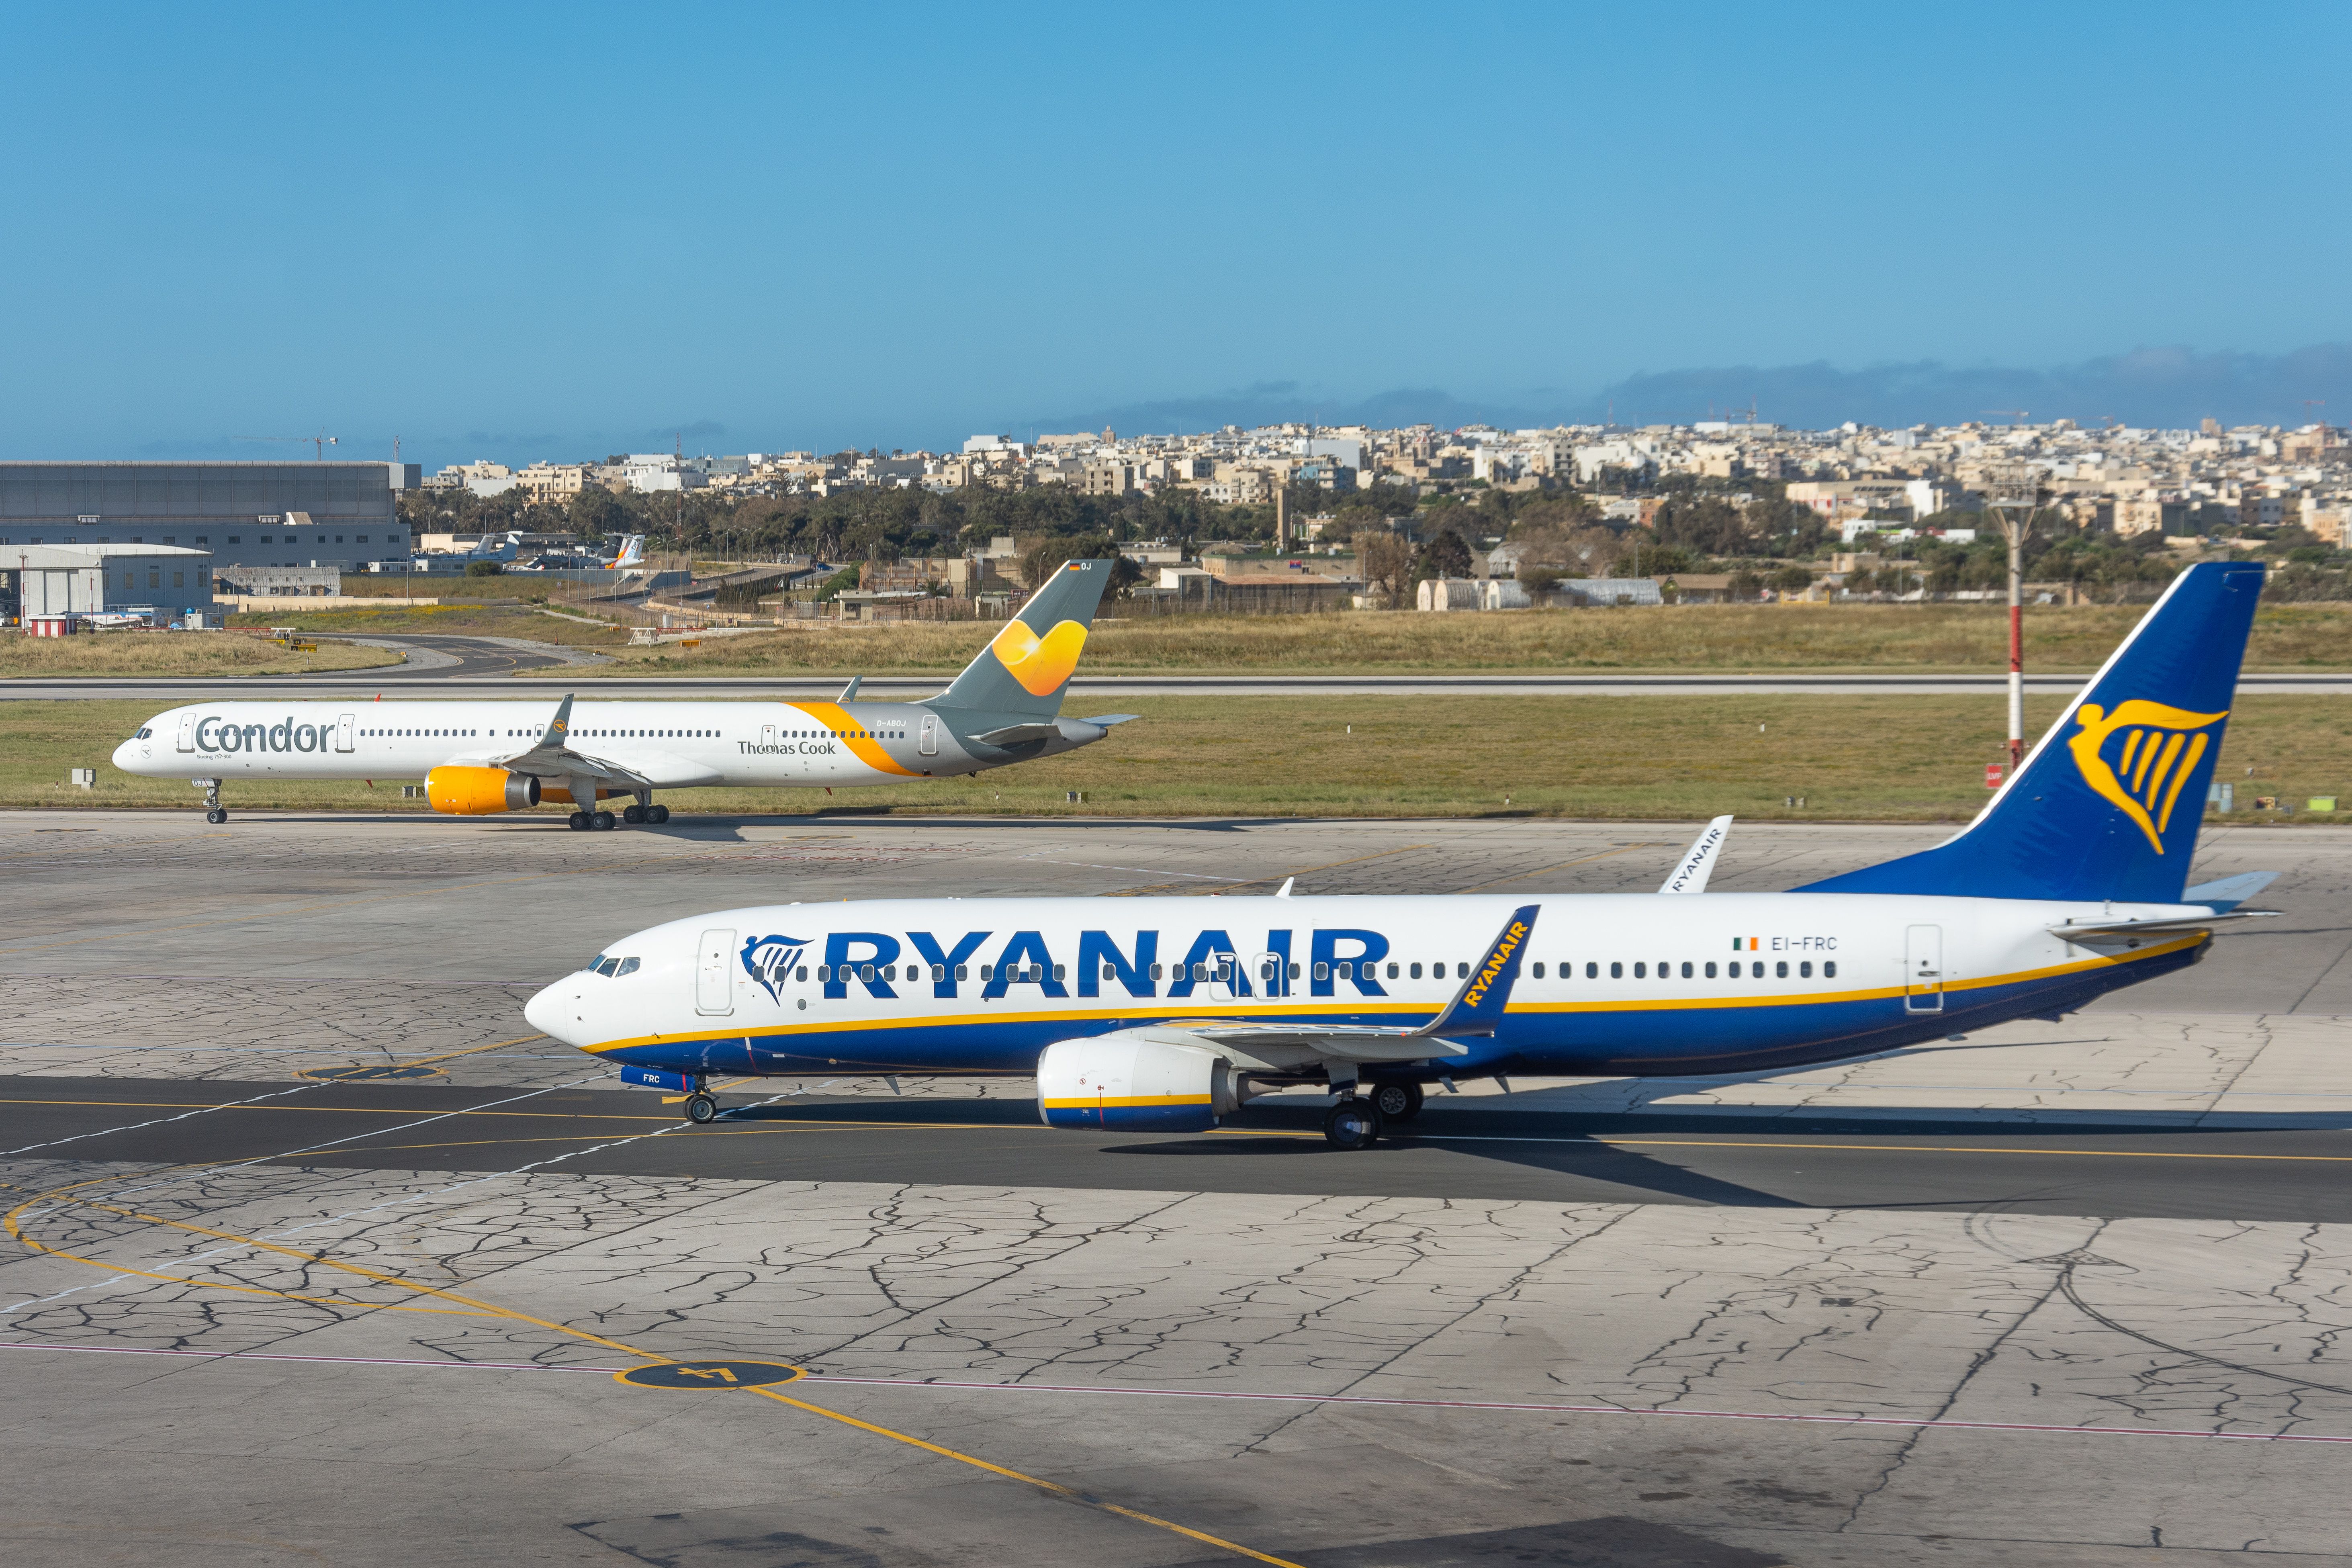 Ryanair Boeing 737-800 and Condor Boeing 757 shutterstock_1411765904